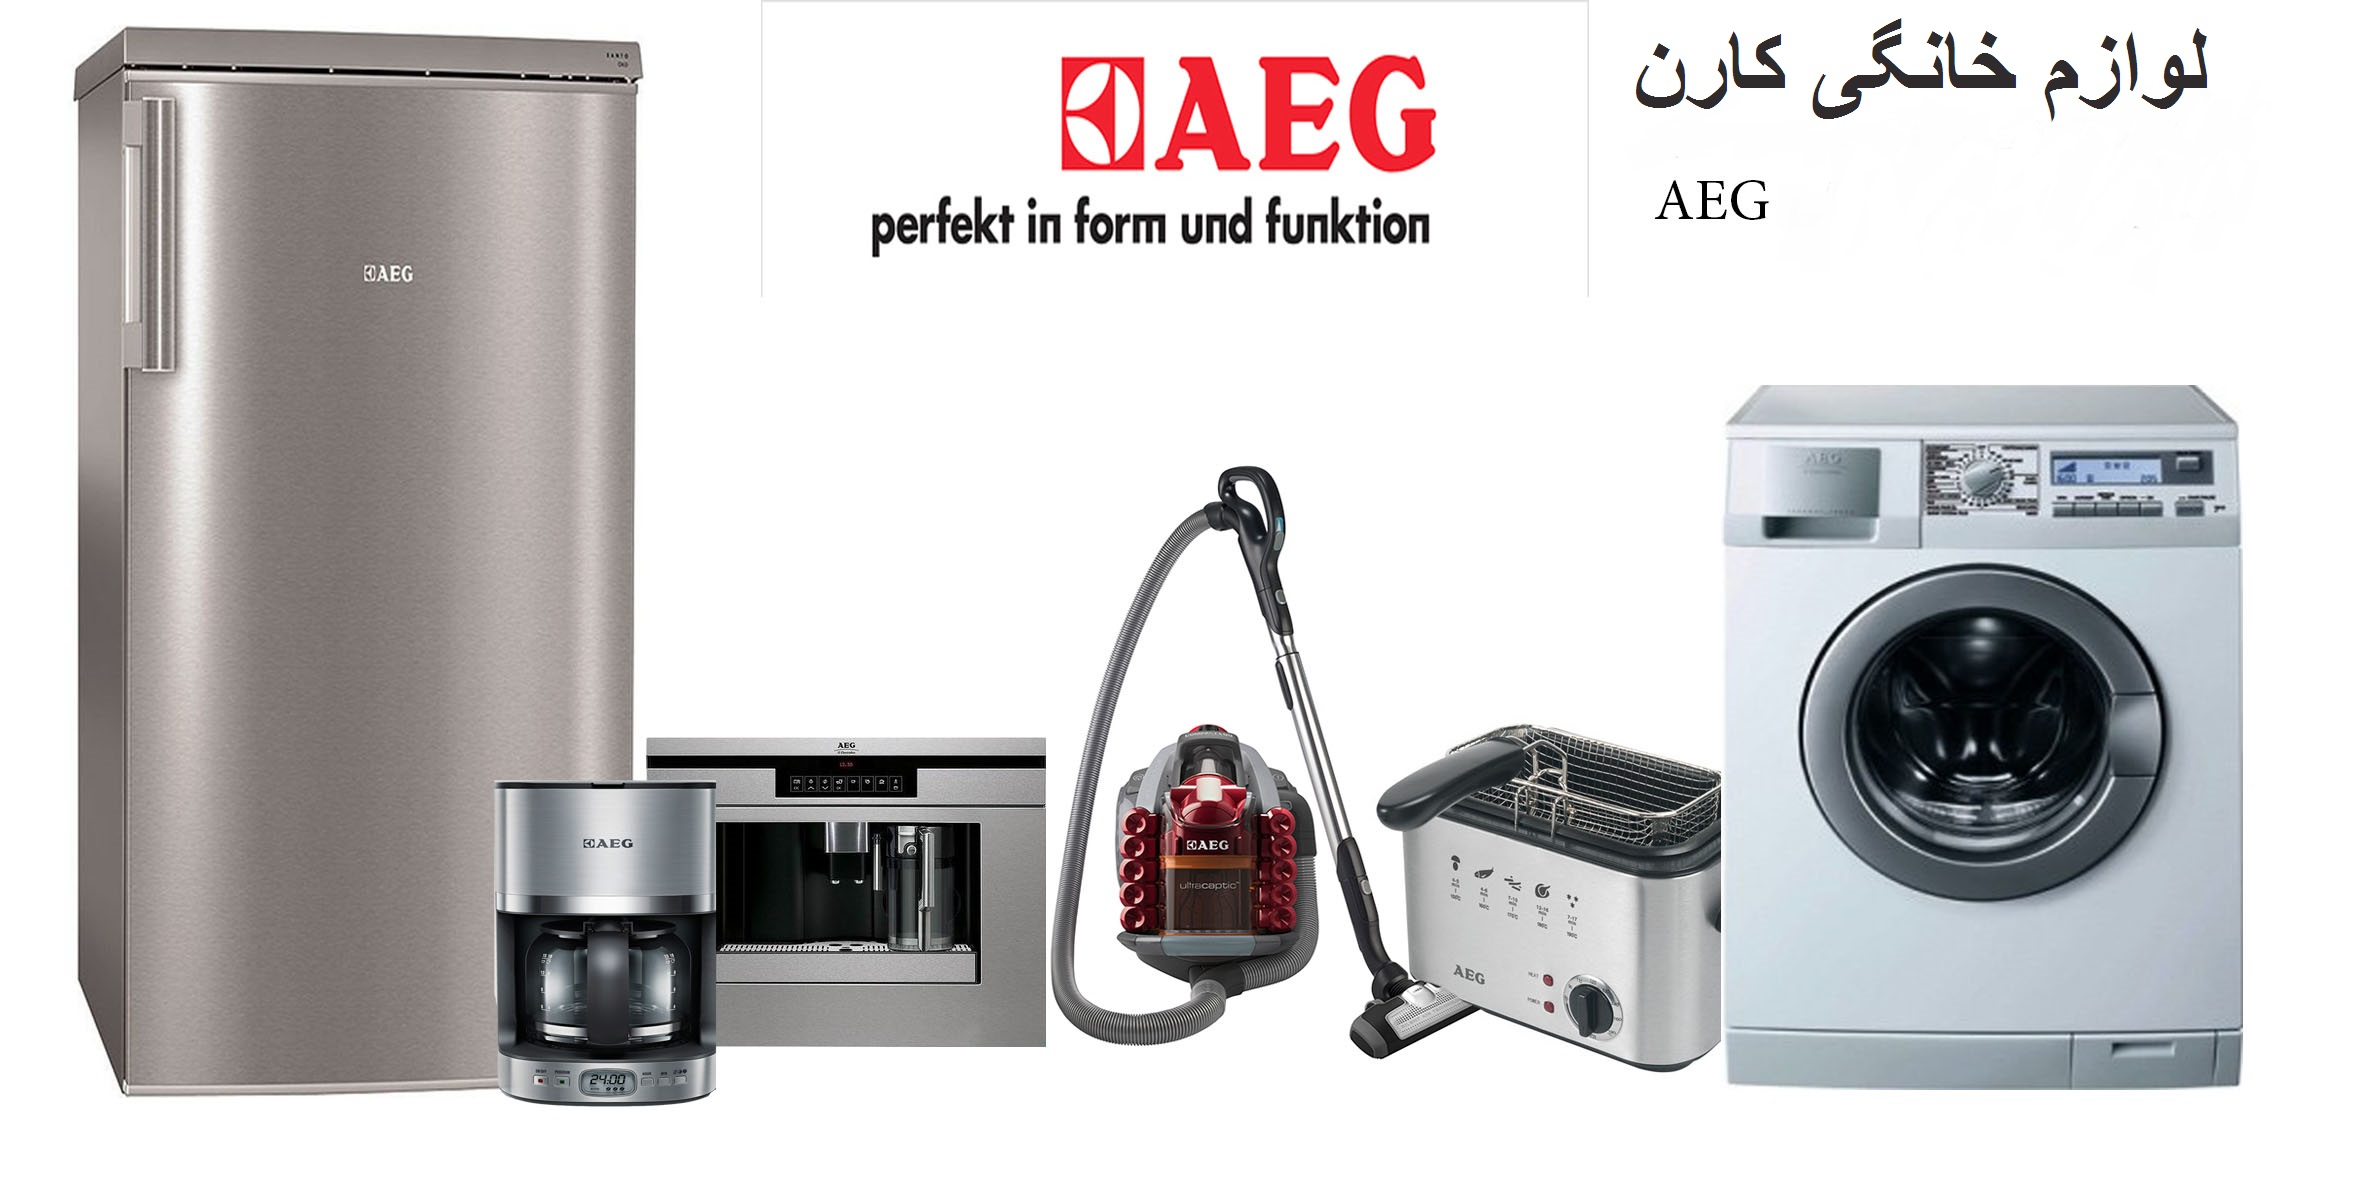 لوازم خانگی AEG فروش کلیه محصولات AEG